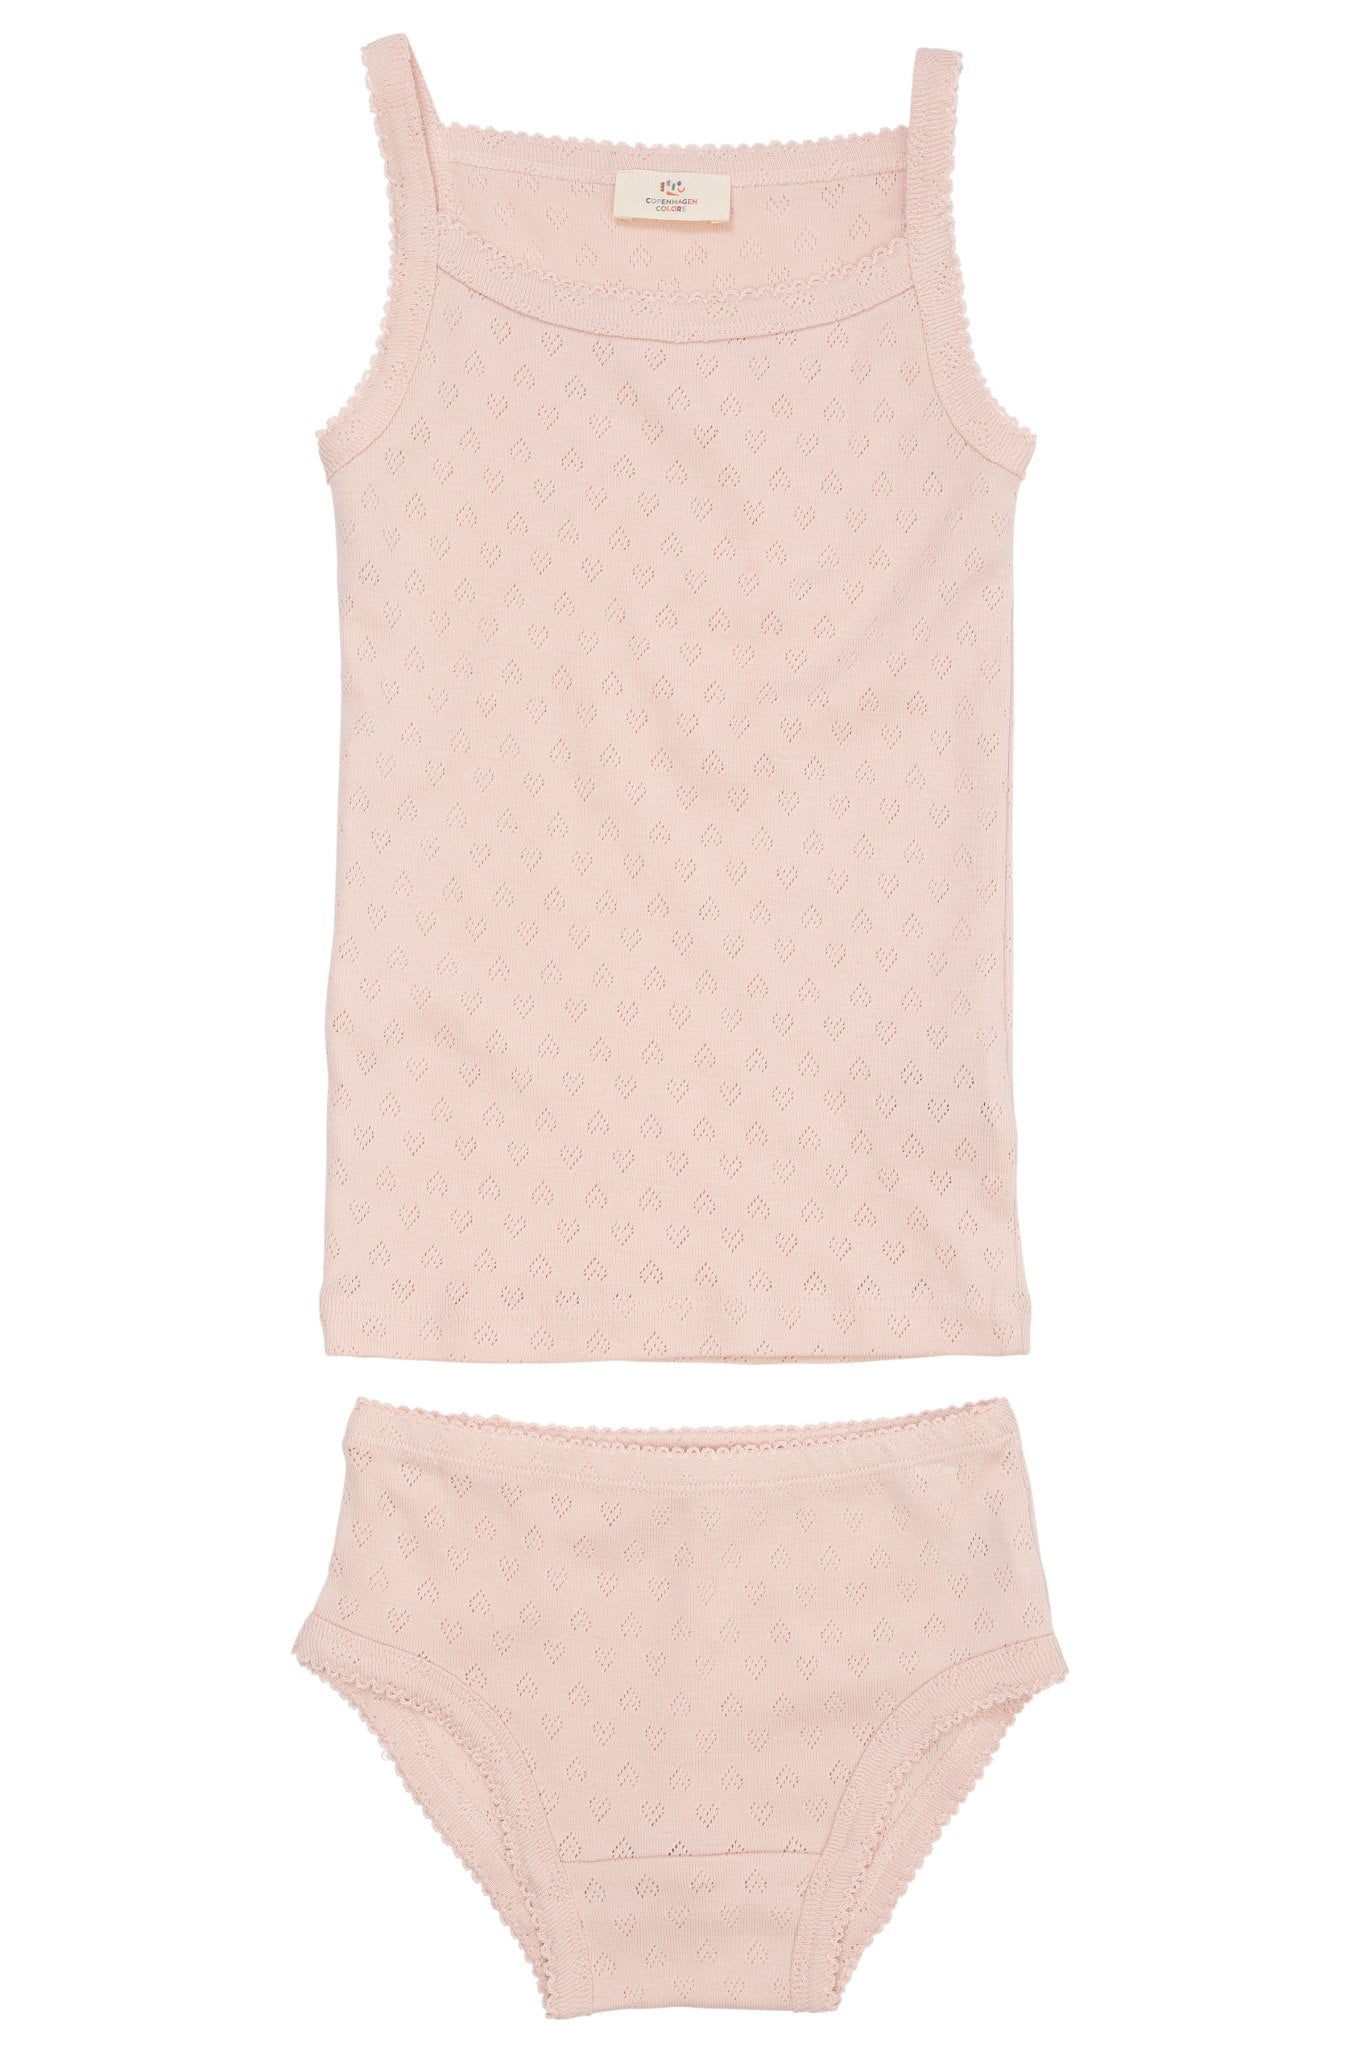 Shorts In Pointelle Cream Copenhagen Colors - Babyshop